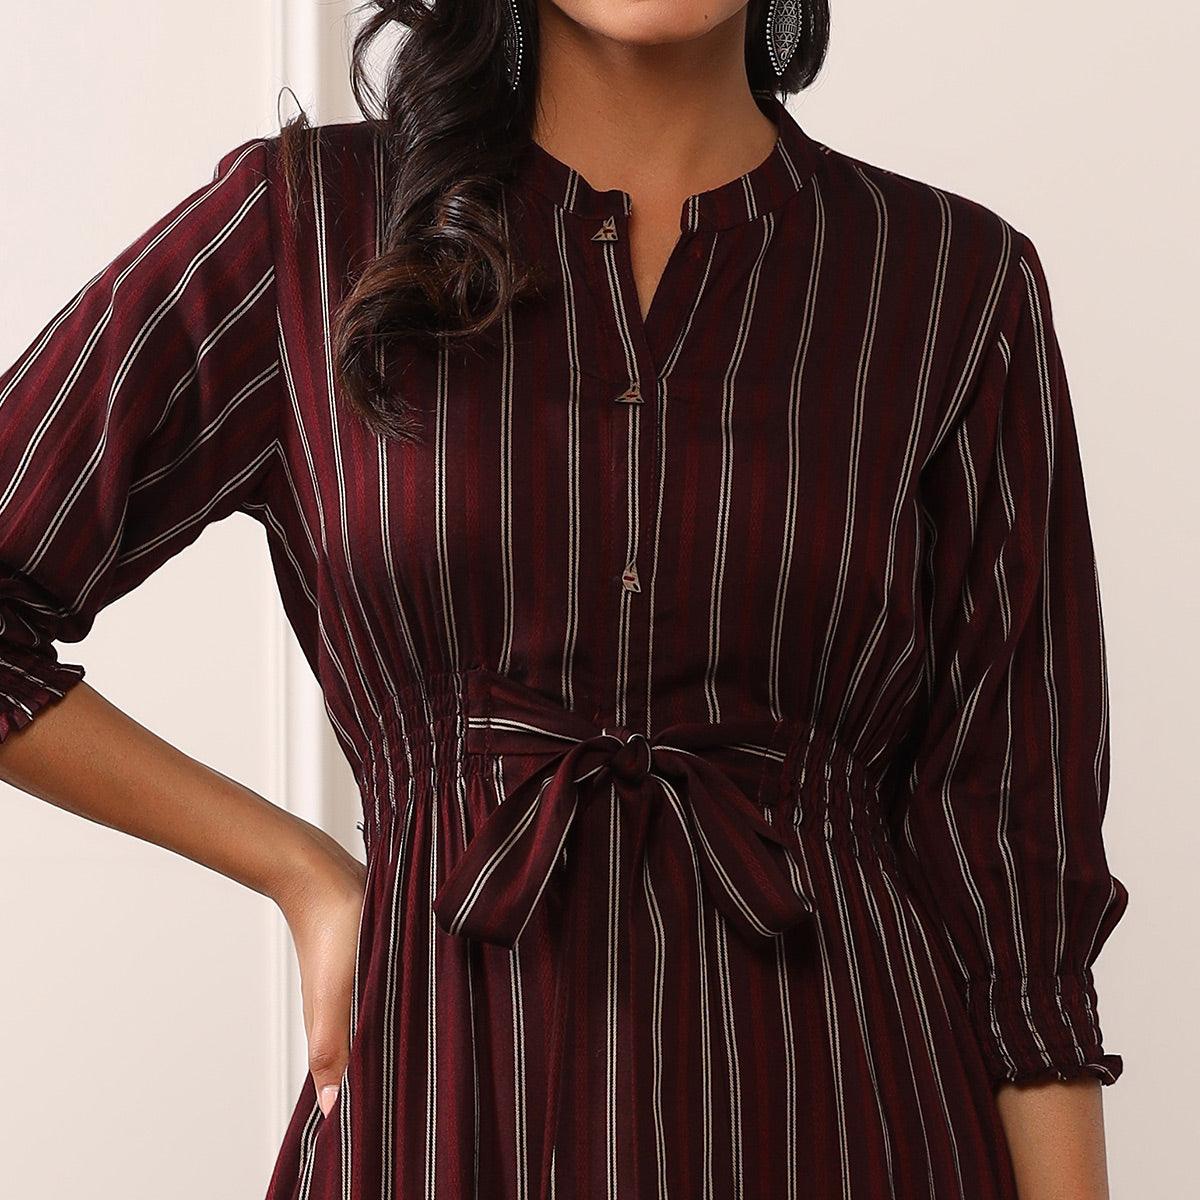 Brown Stripe Printed Rayon Dress - Peachmode